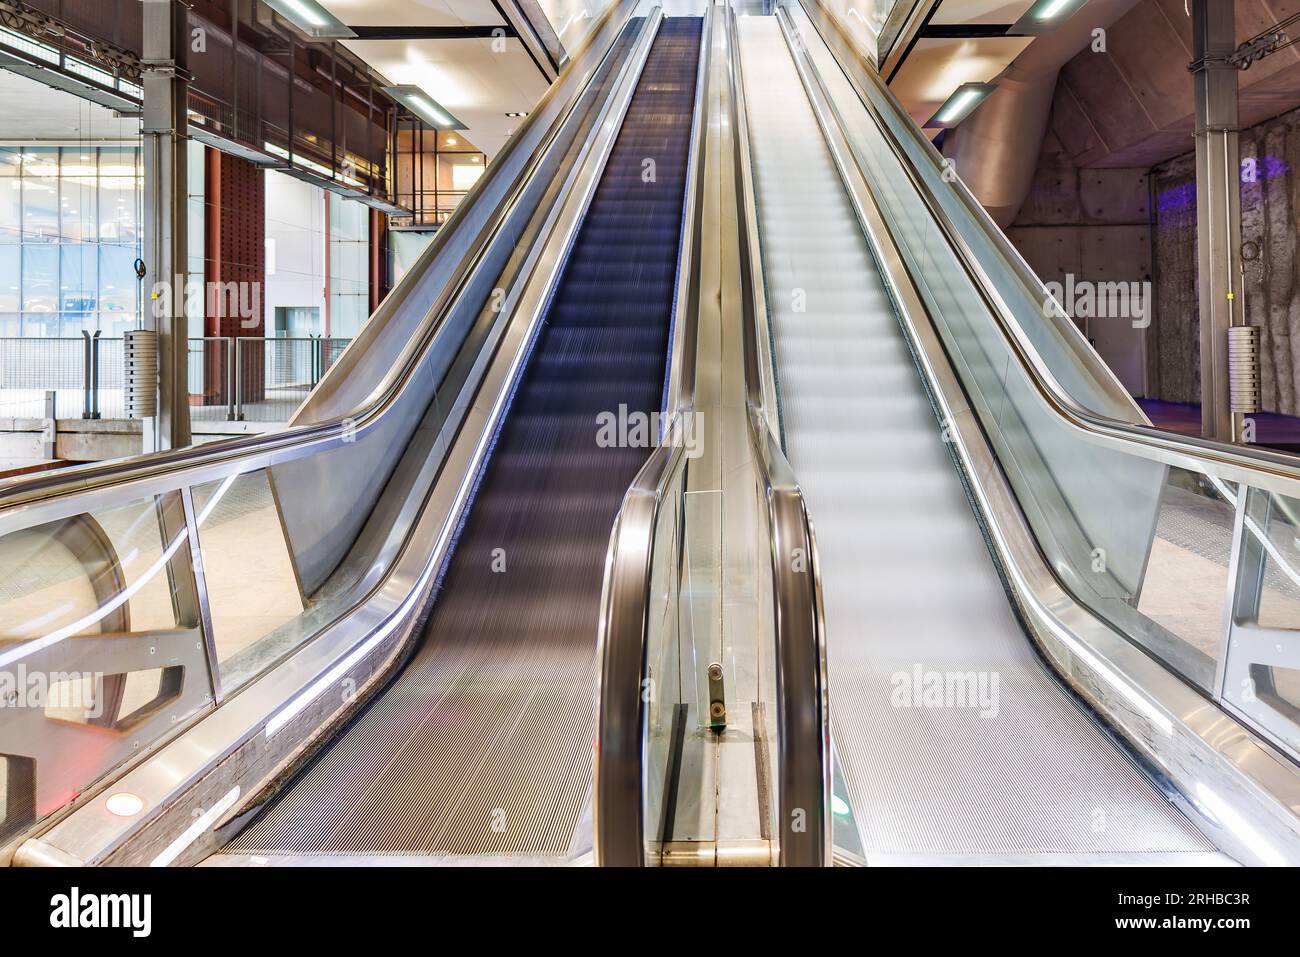 Long exposure photography of escalators in movement Stock Photo